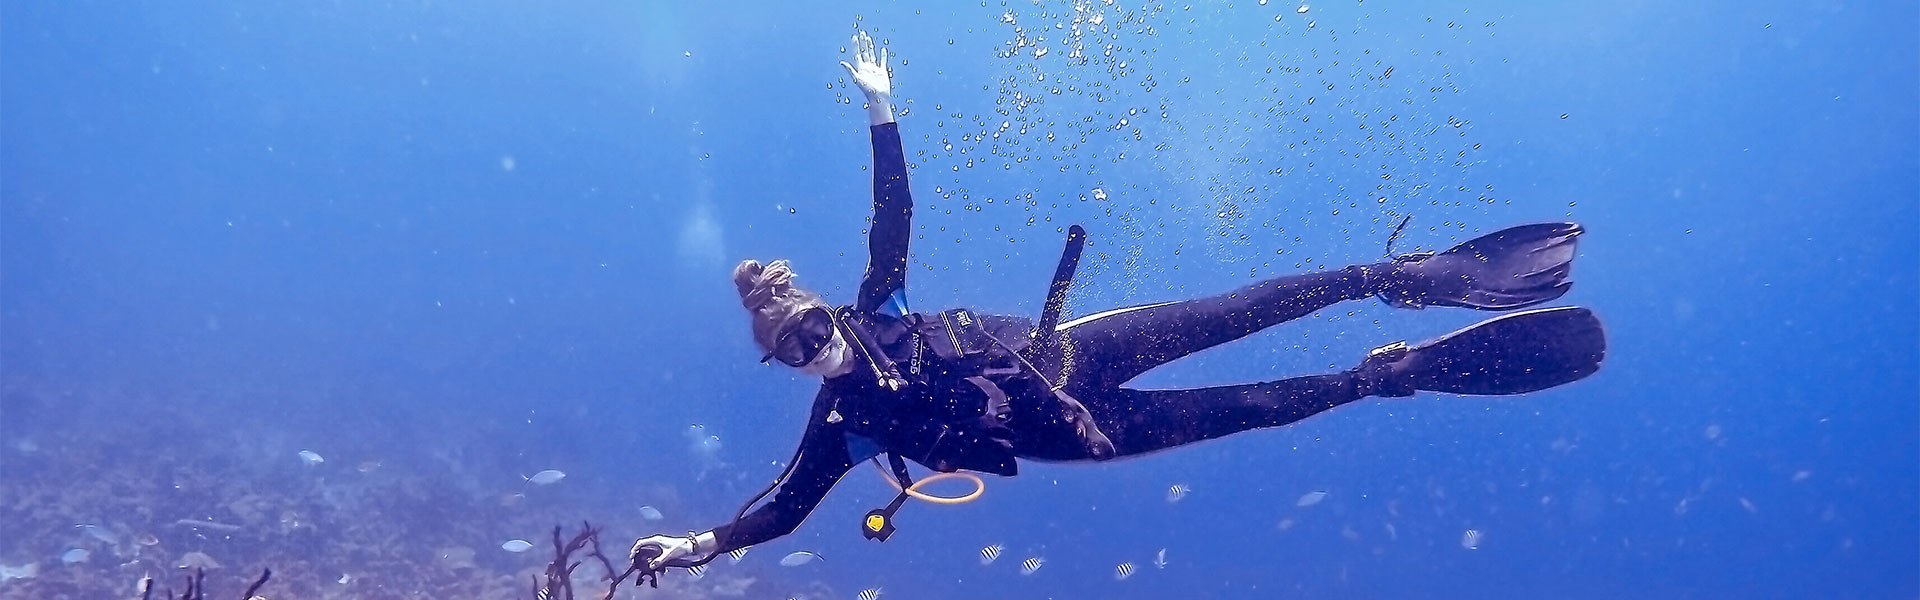 Scuba diving rasta girl above wreck in Cuba